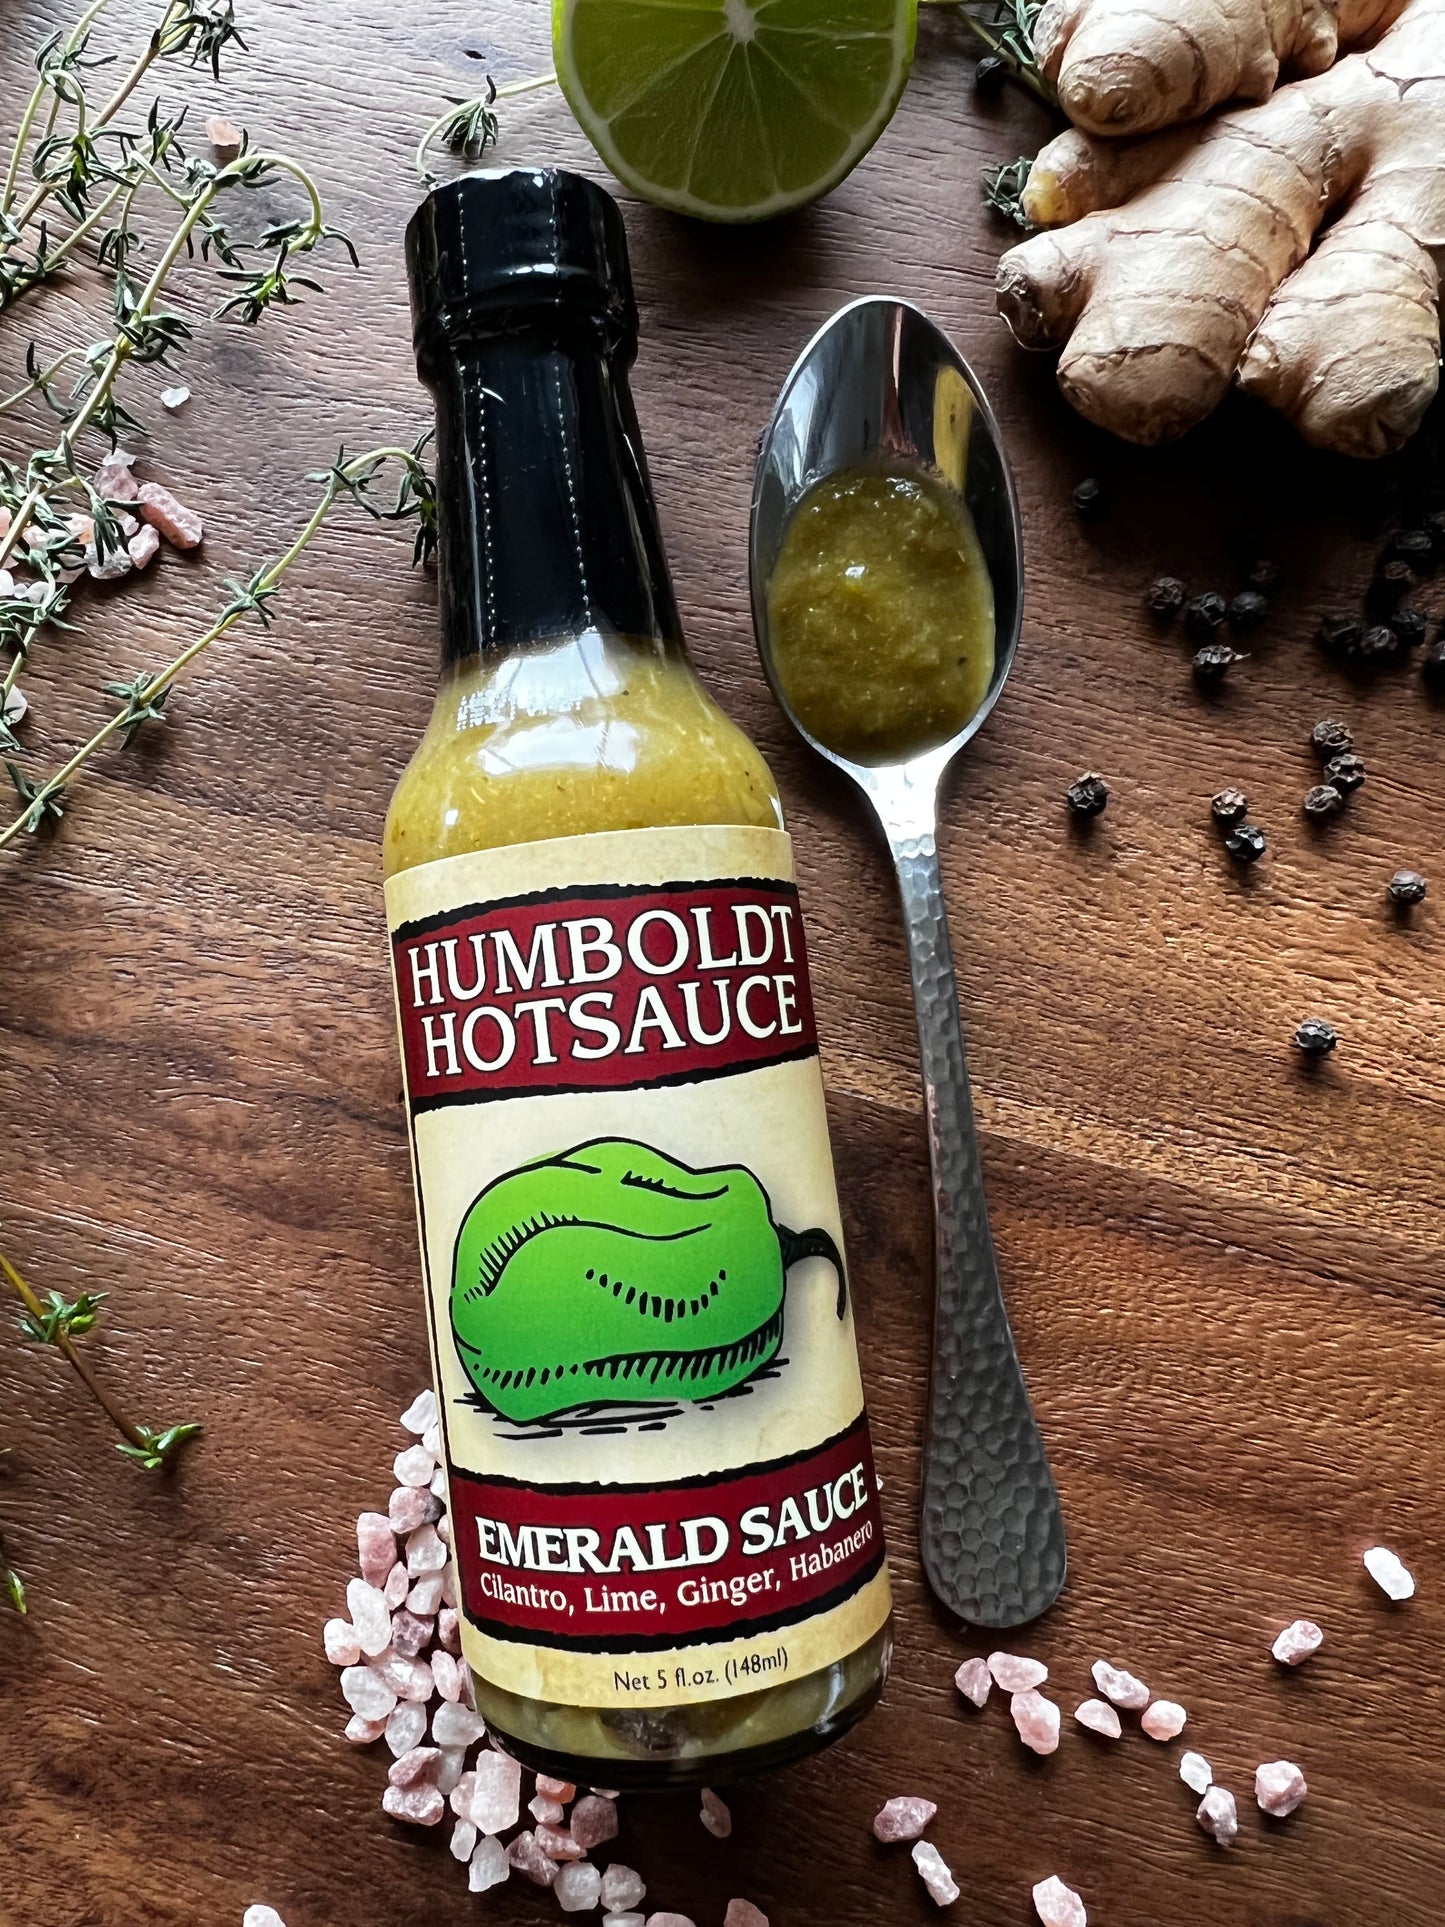 Humboldt HotSauce - Emerald Sauce